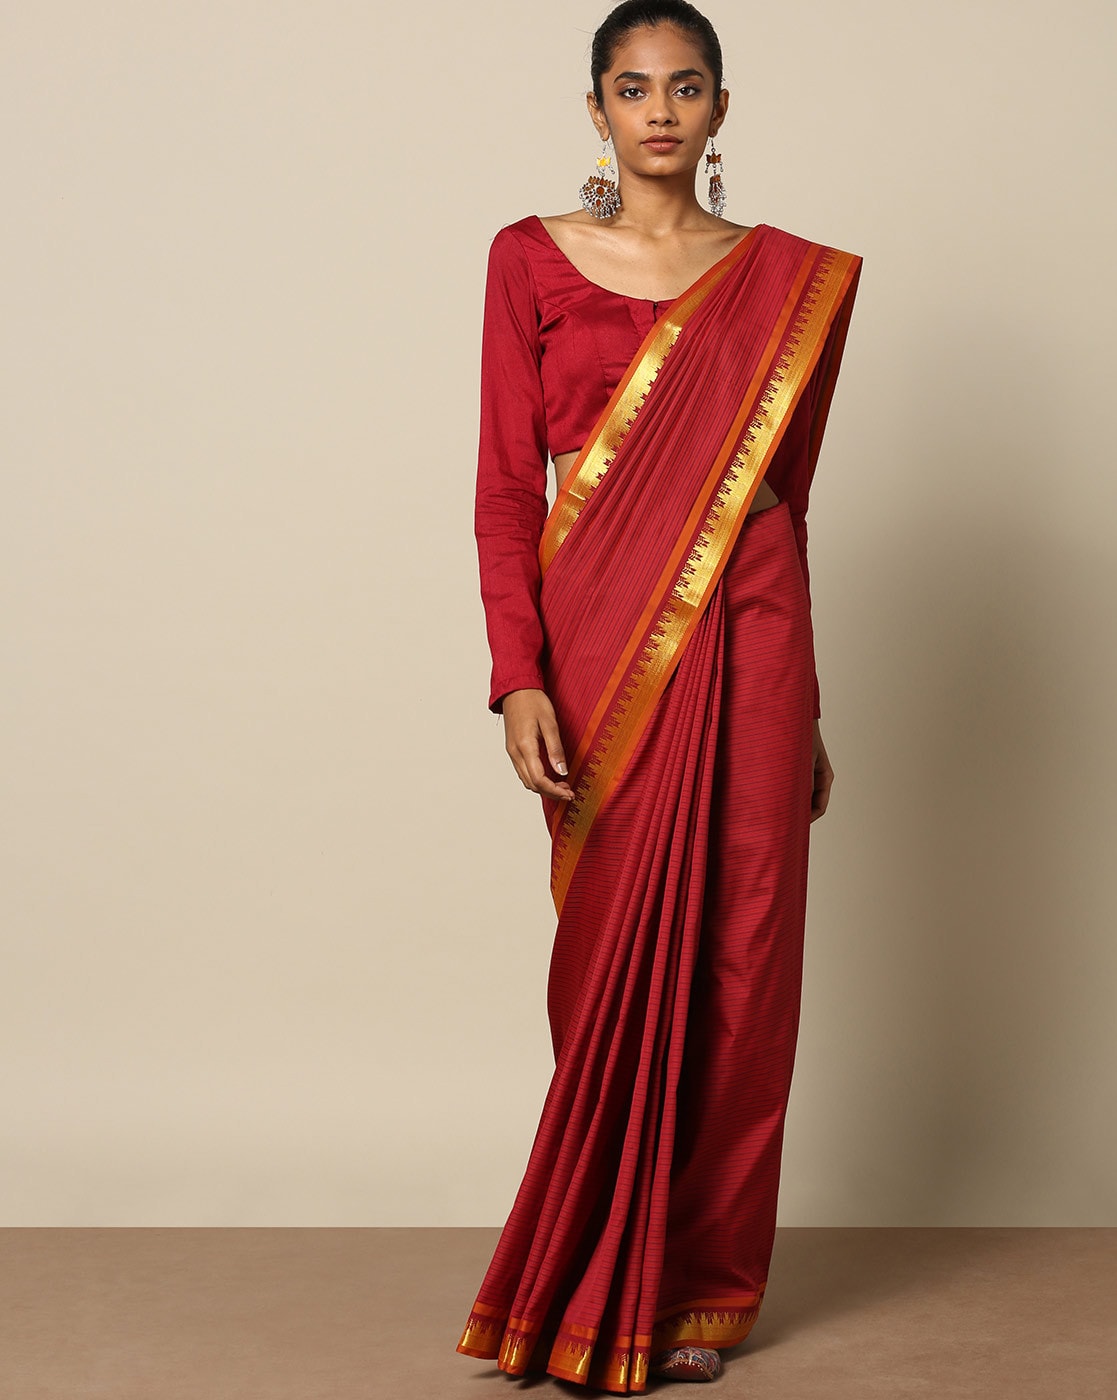 15+ Pink Muhurtham Kanjeevaram Sarees We Love | Indian bridal fashion,  South indian bride saree, Bridal sarees south indian